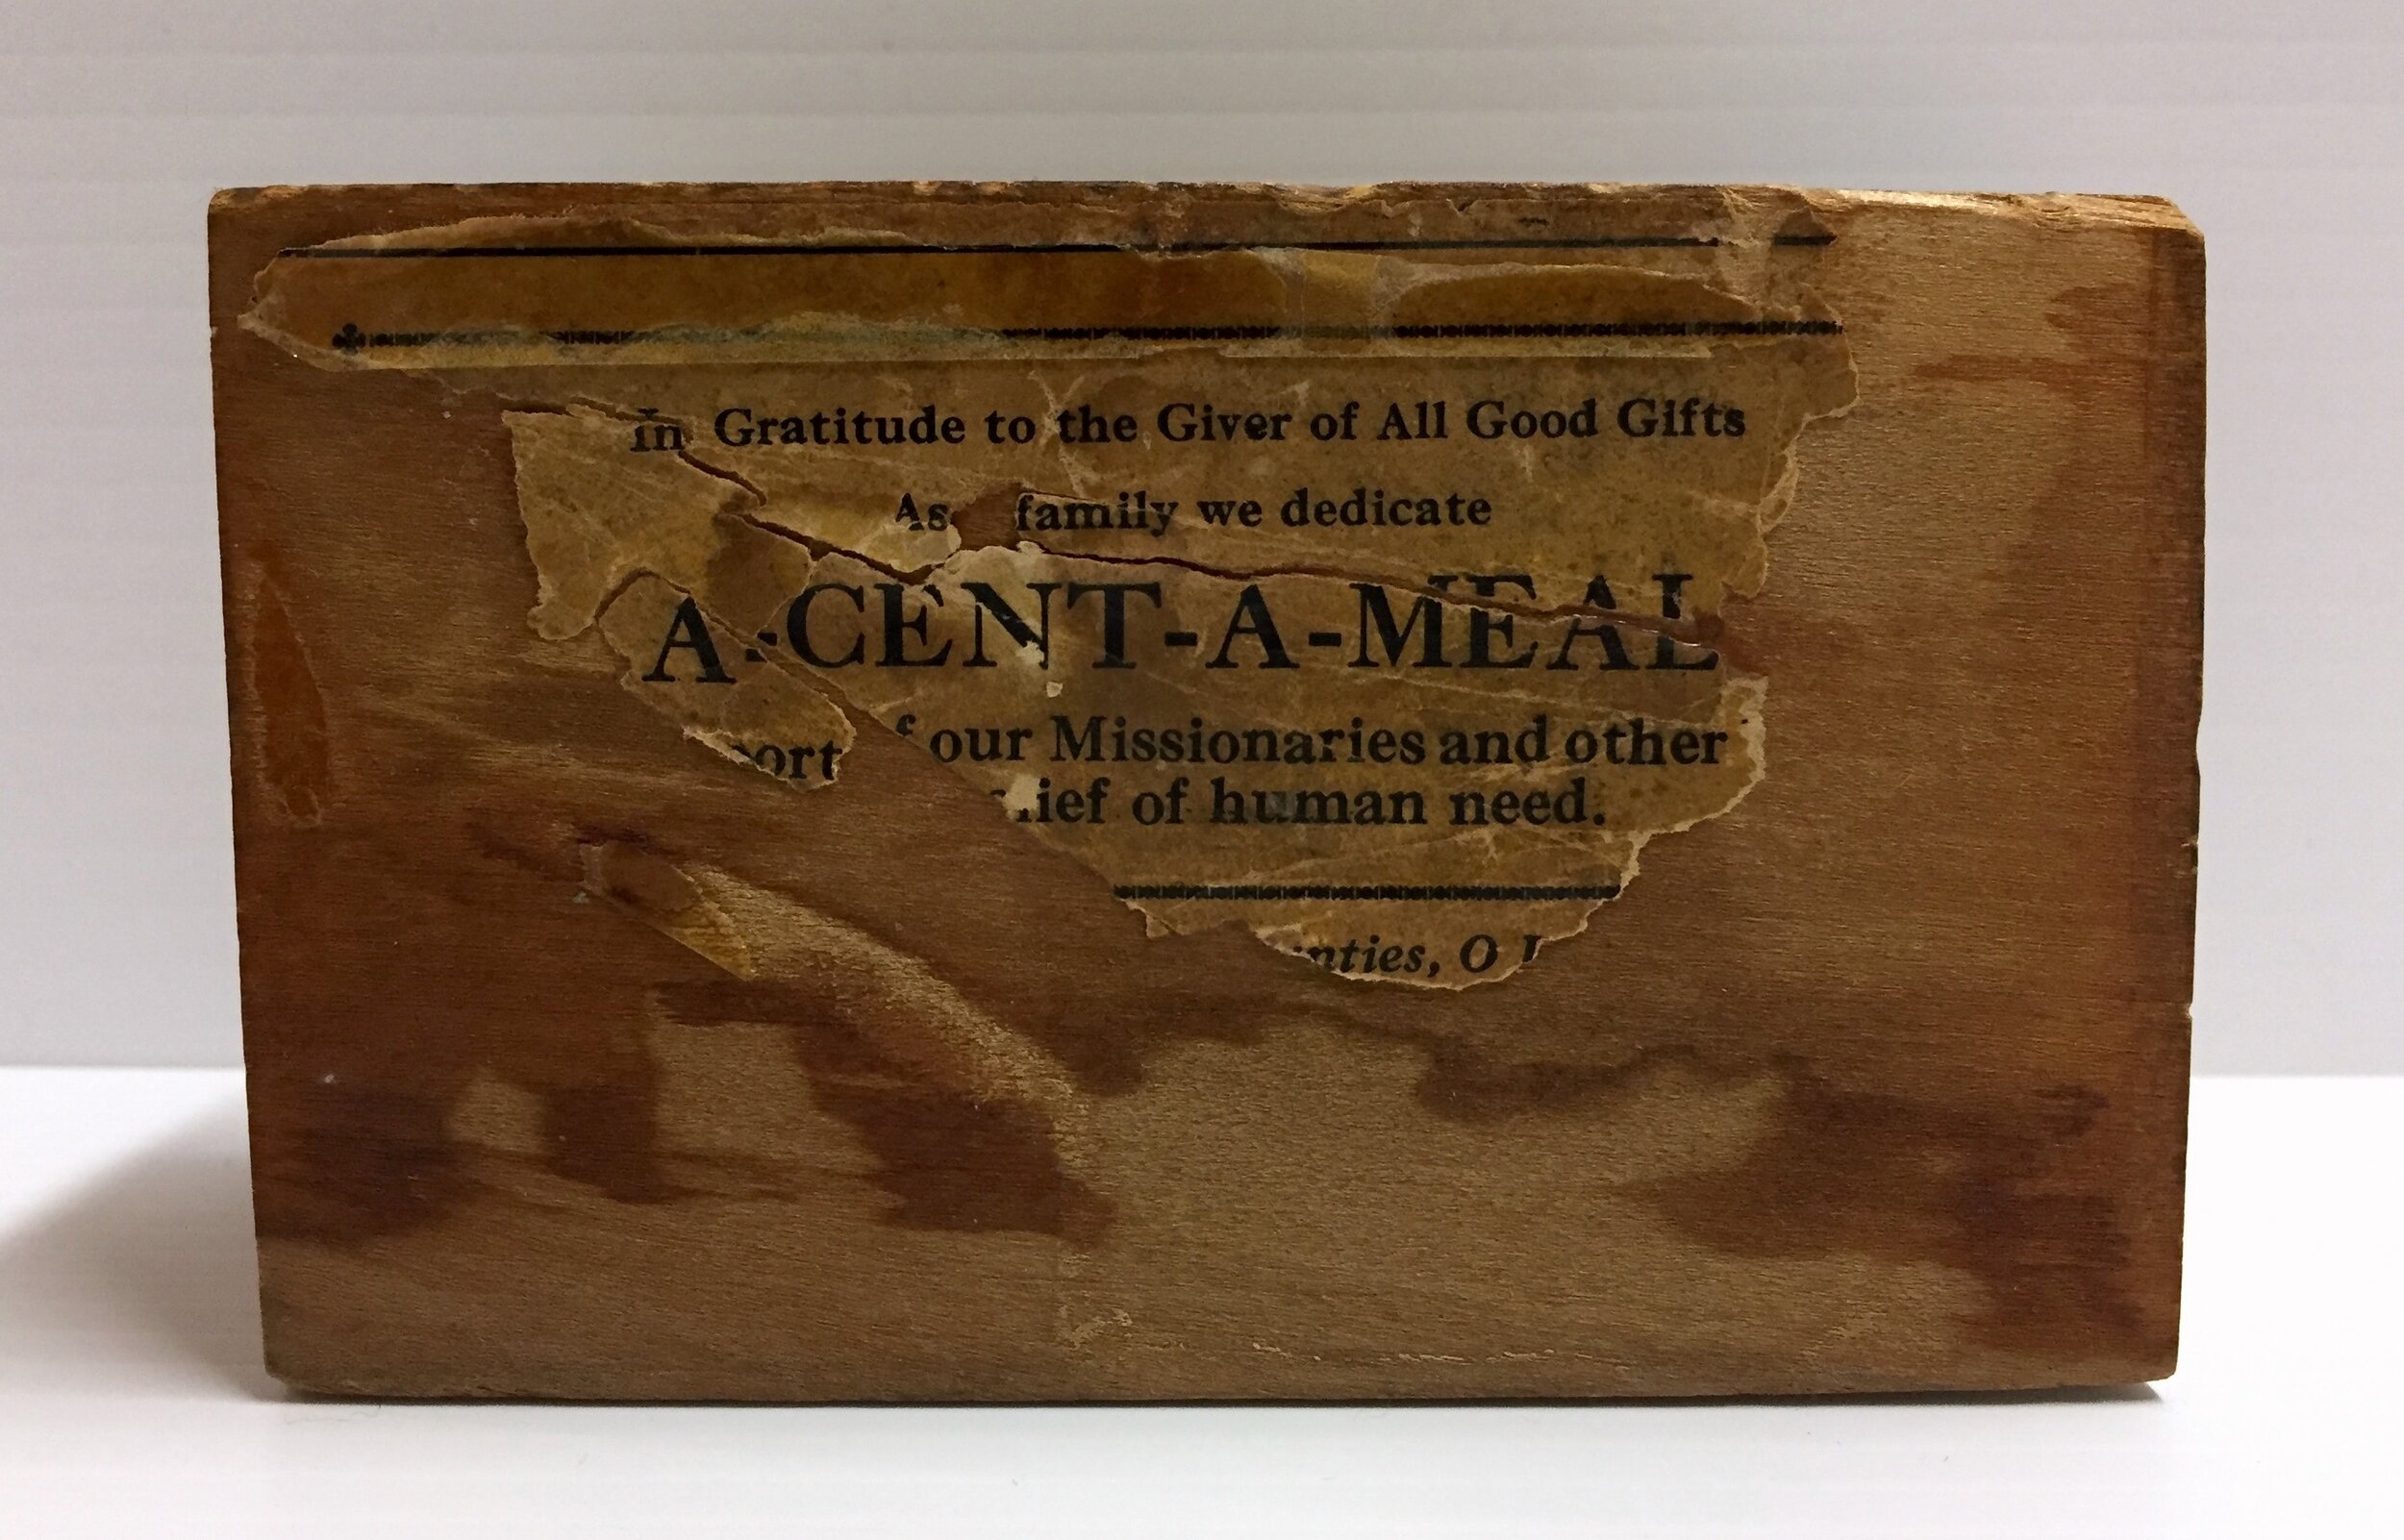 Methodist Church Cent-A-Meal Box, 1918 or 1919